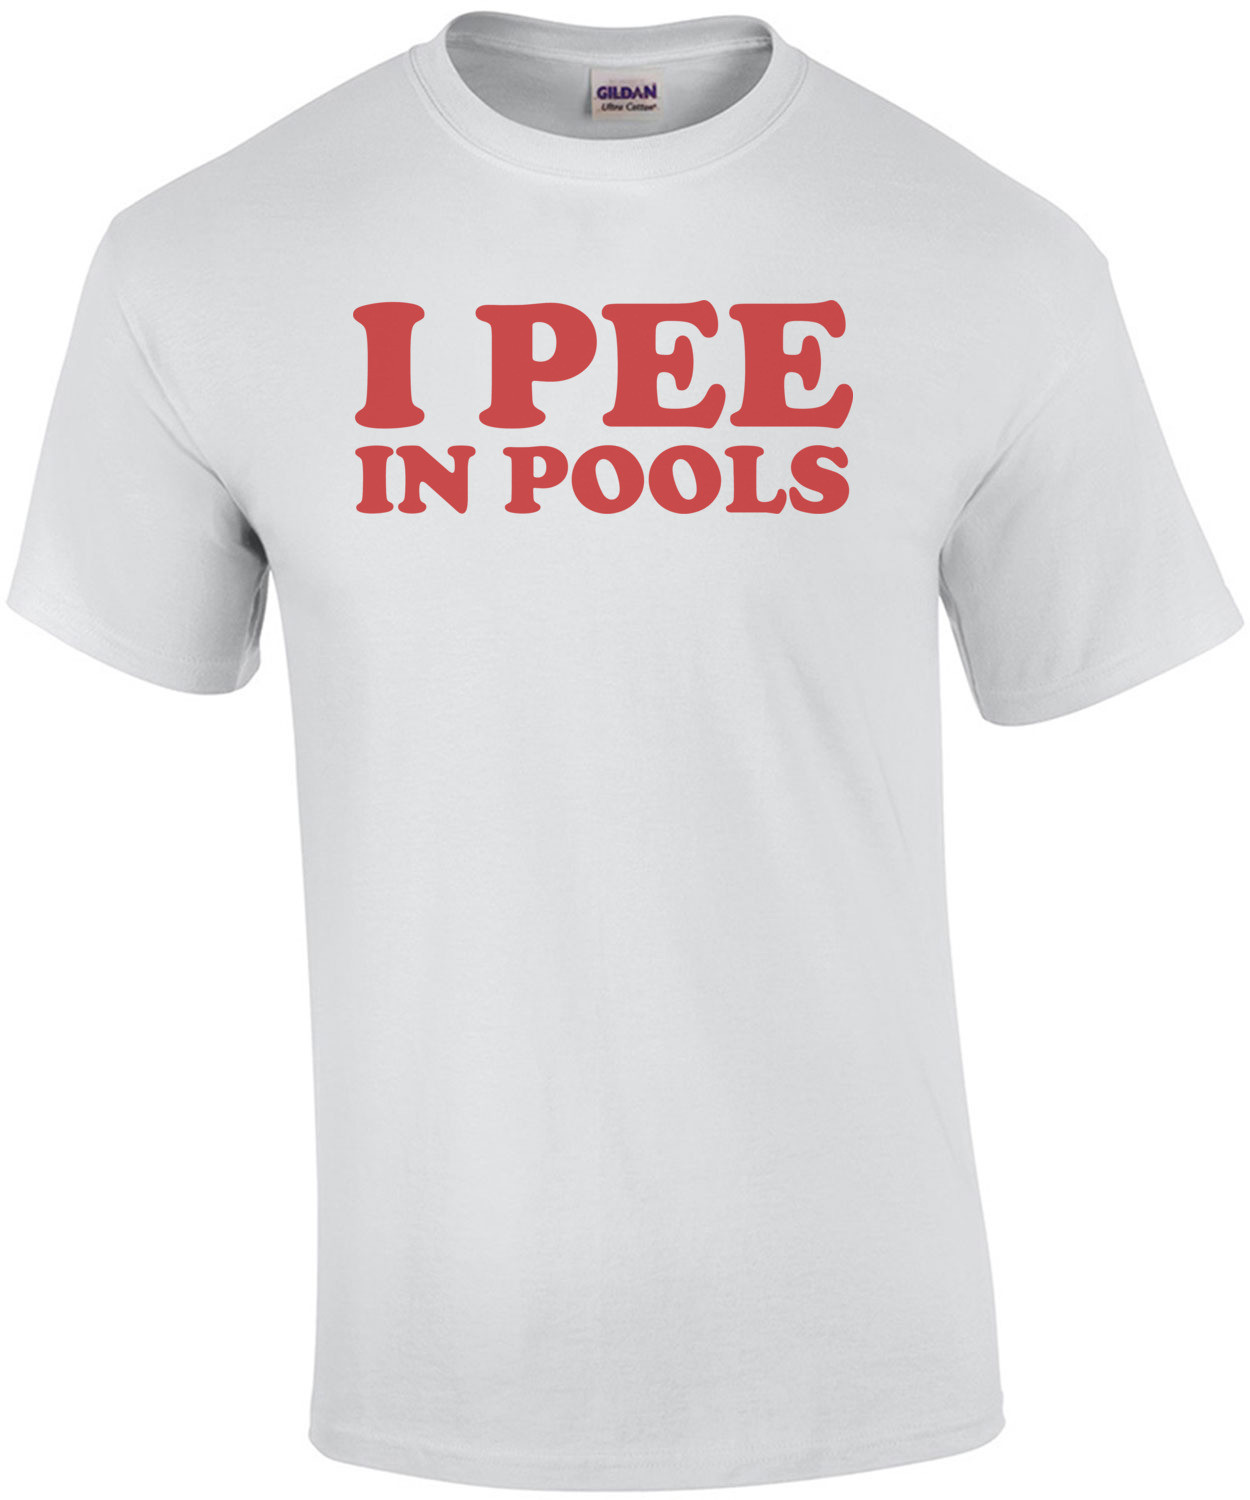 I Pee in Pools T-Shirt